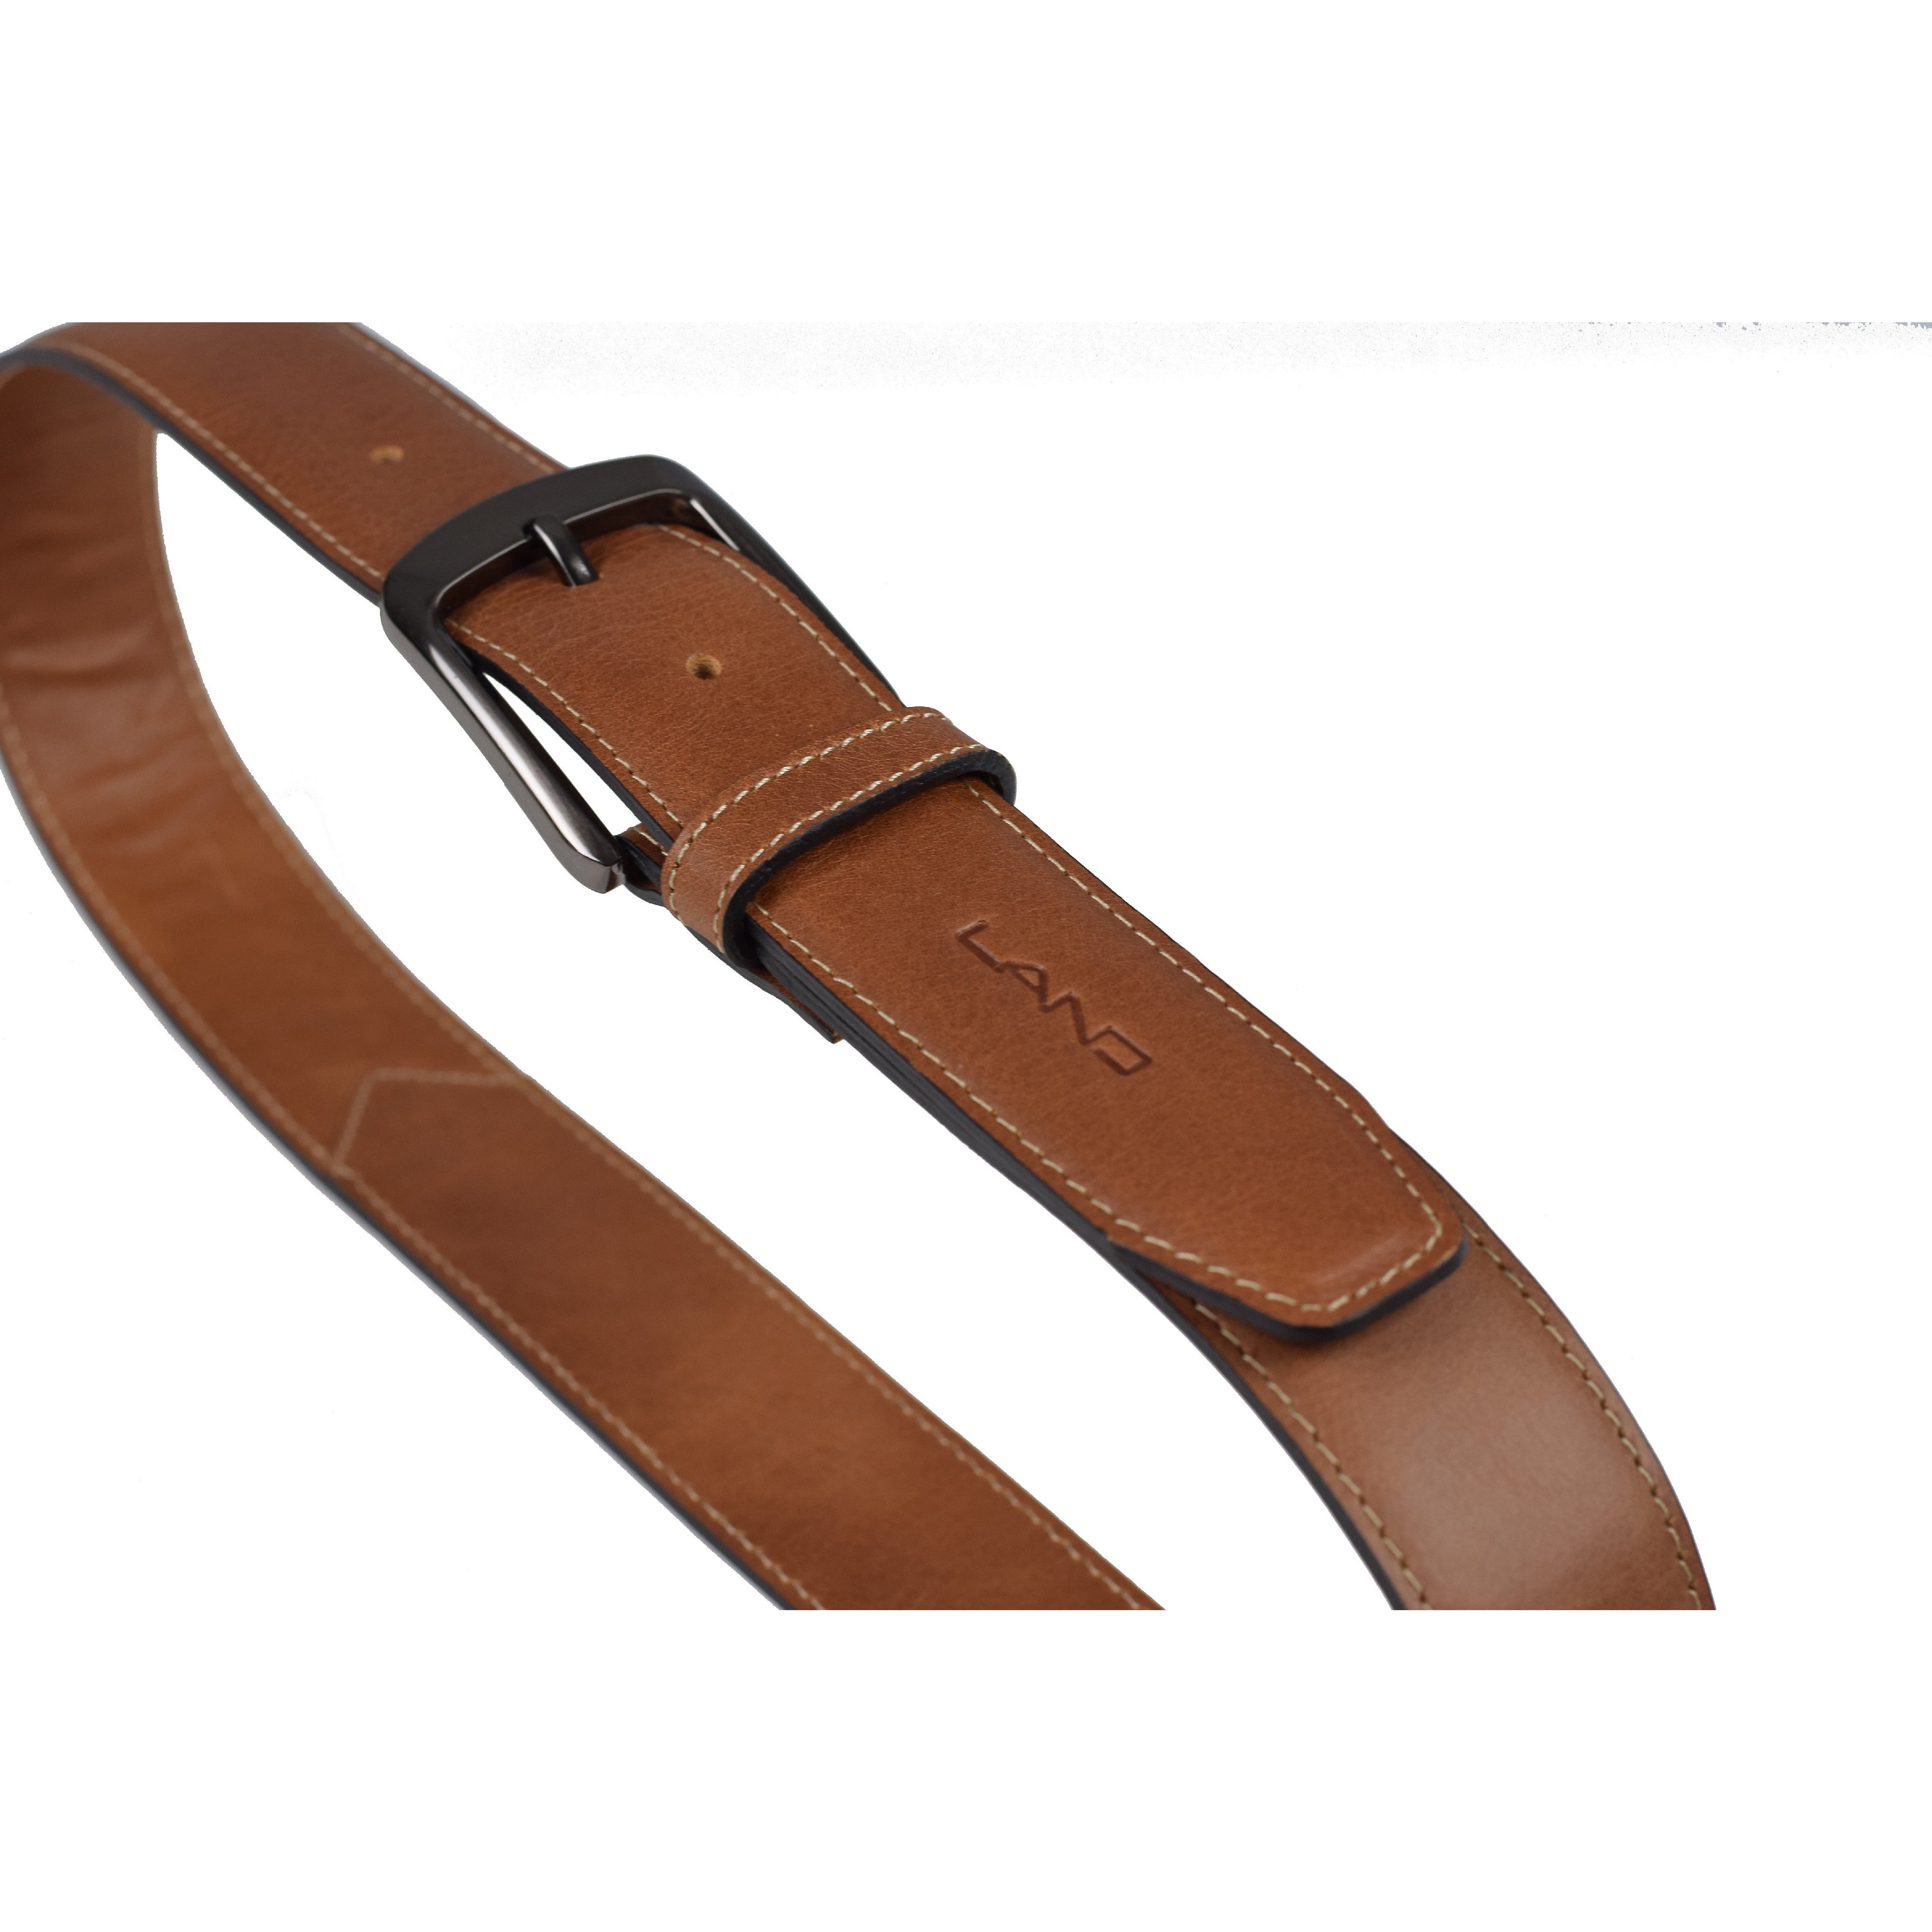 Buy HIDE & SKIN Top Grain Genuine Leather Handmade, Casual Belt for Men, 46 inches length